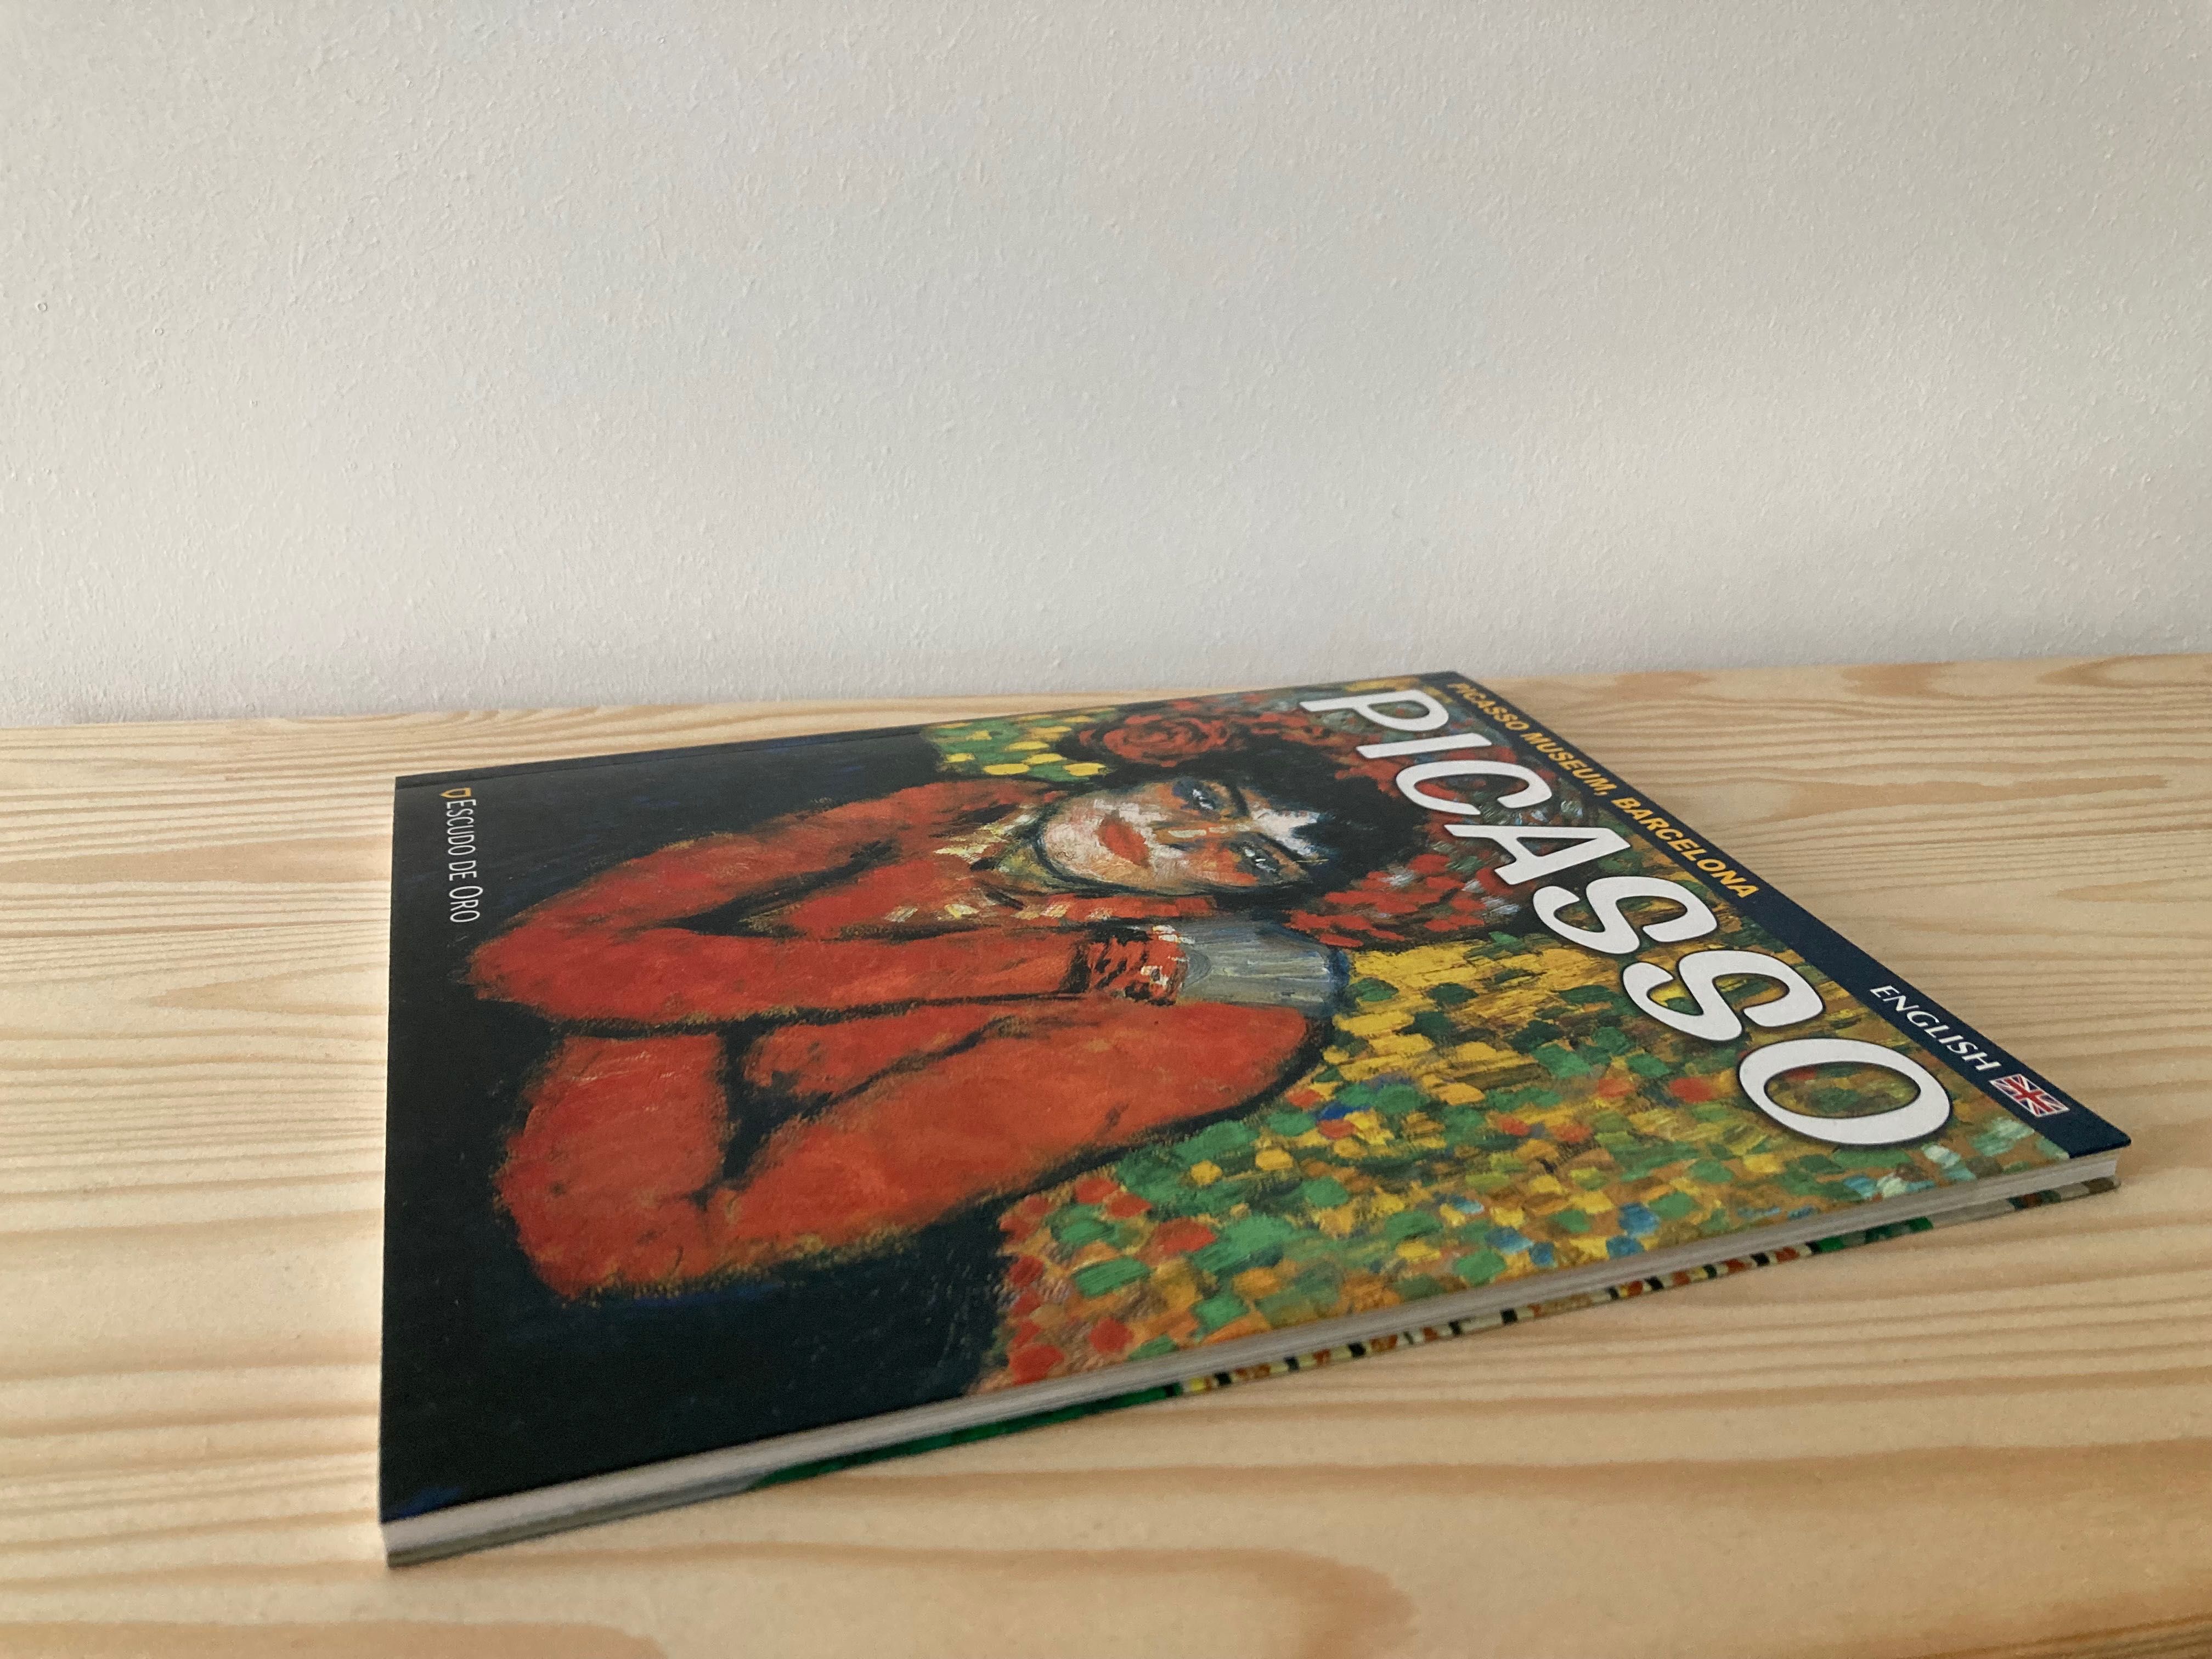 Katalog Picasso, Picasso Museum, Barcelona - nowy